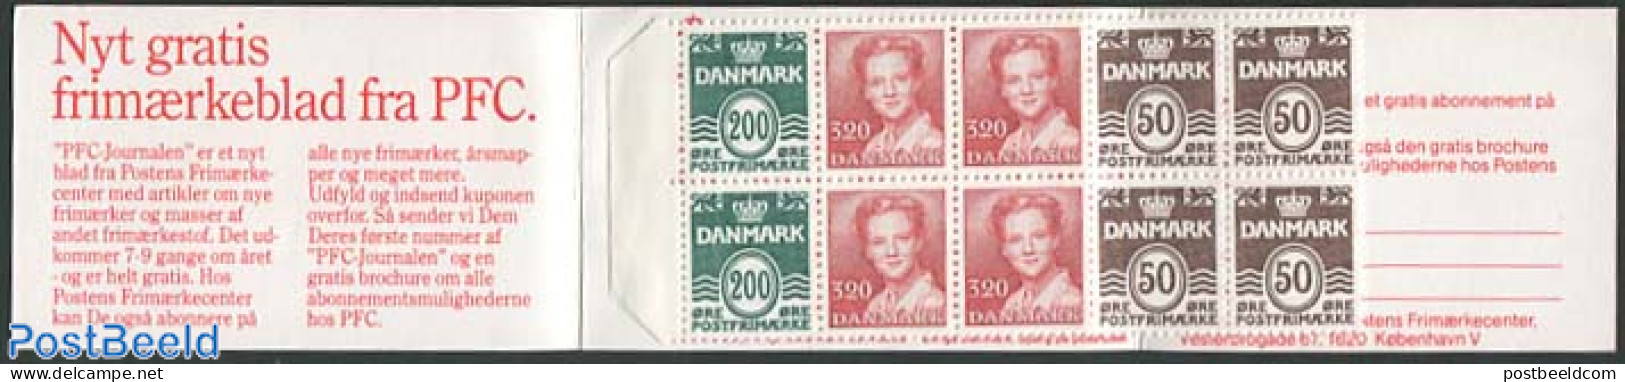 Denmark 1989 Definitives Booklet (H33 On Cover), Mint NH, Stamp Booklets - Unused Stamps